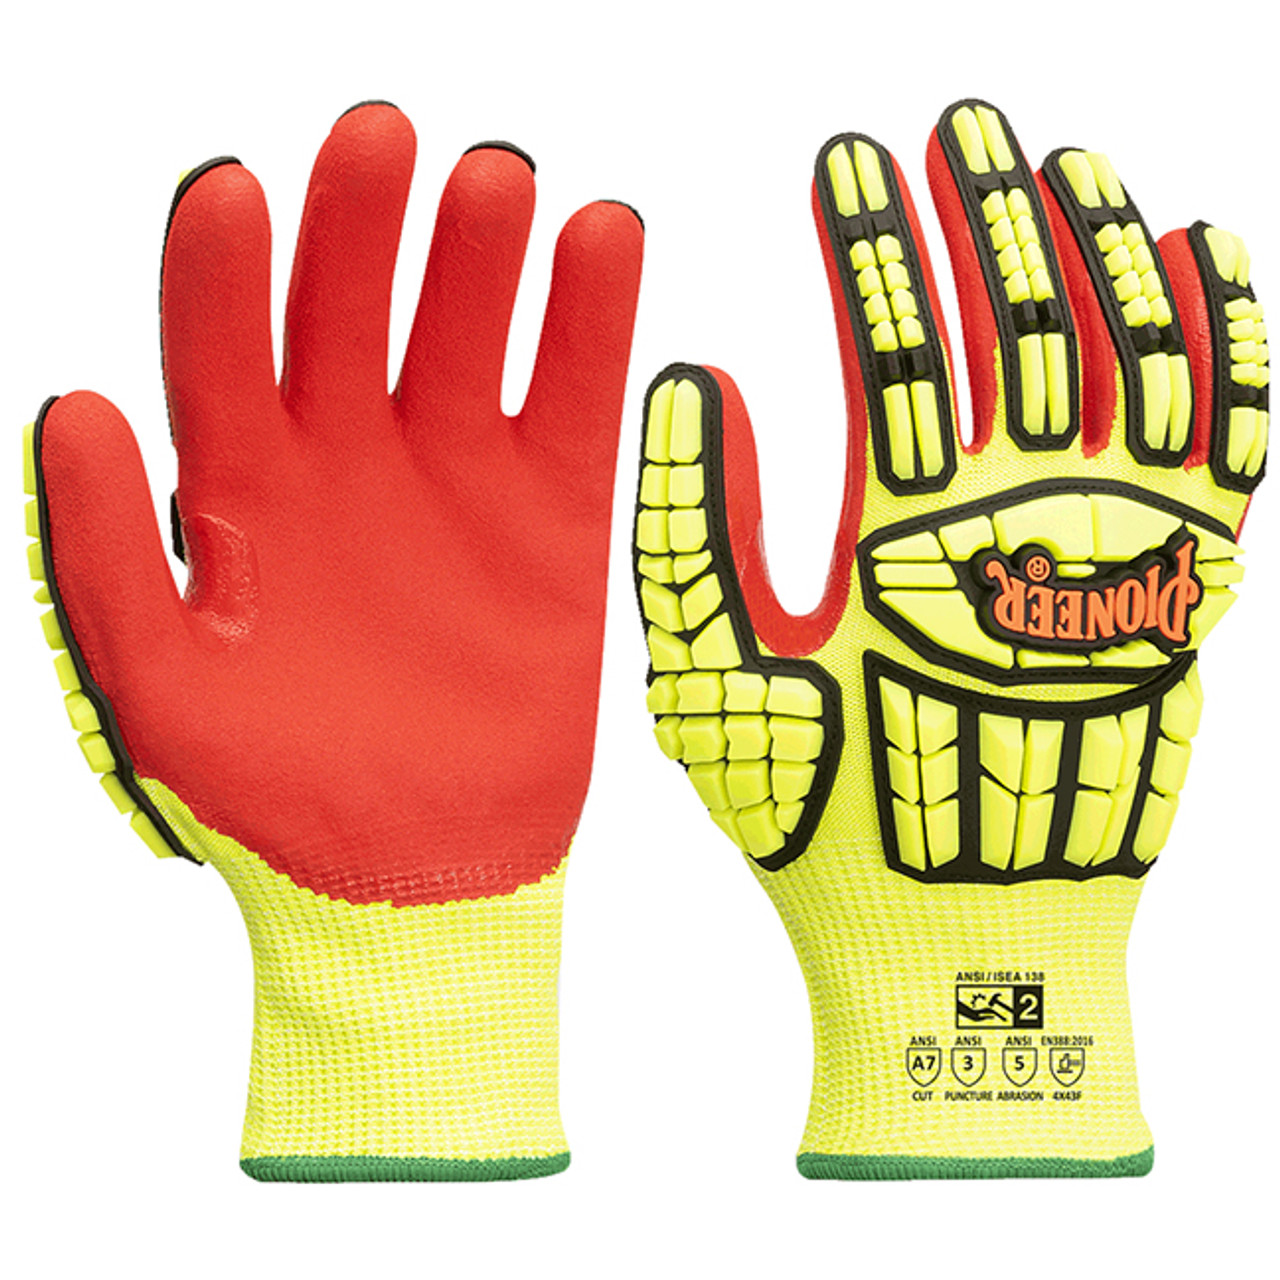 TPR Impact-Resistant Glove, Cut Level A7